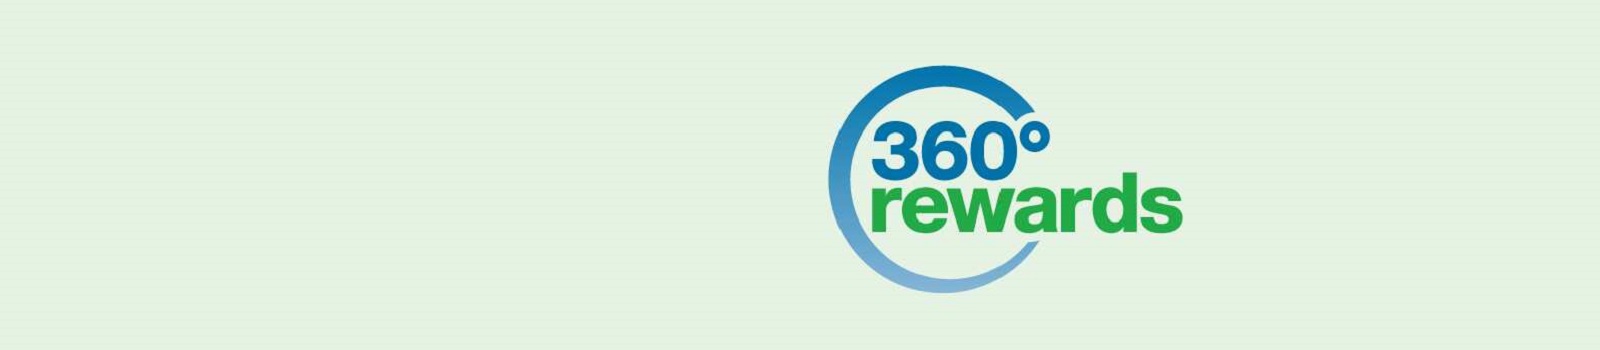 360° Rewards Programme